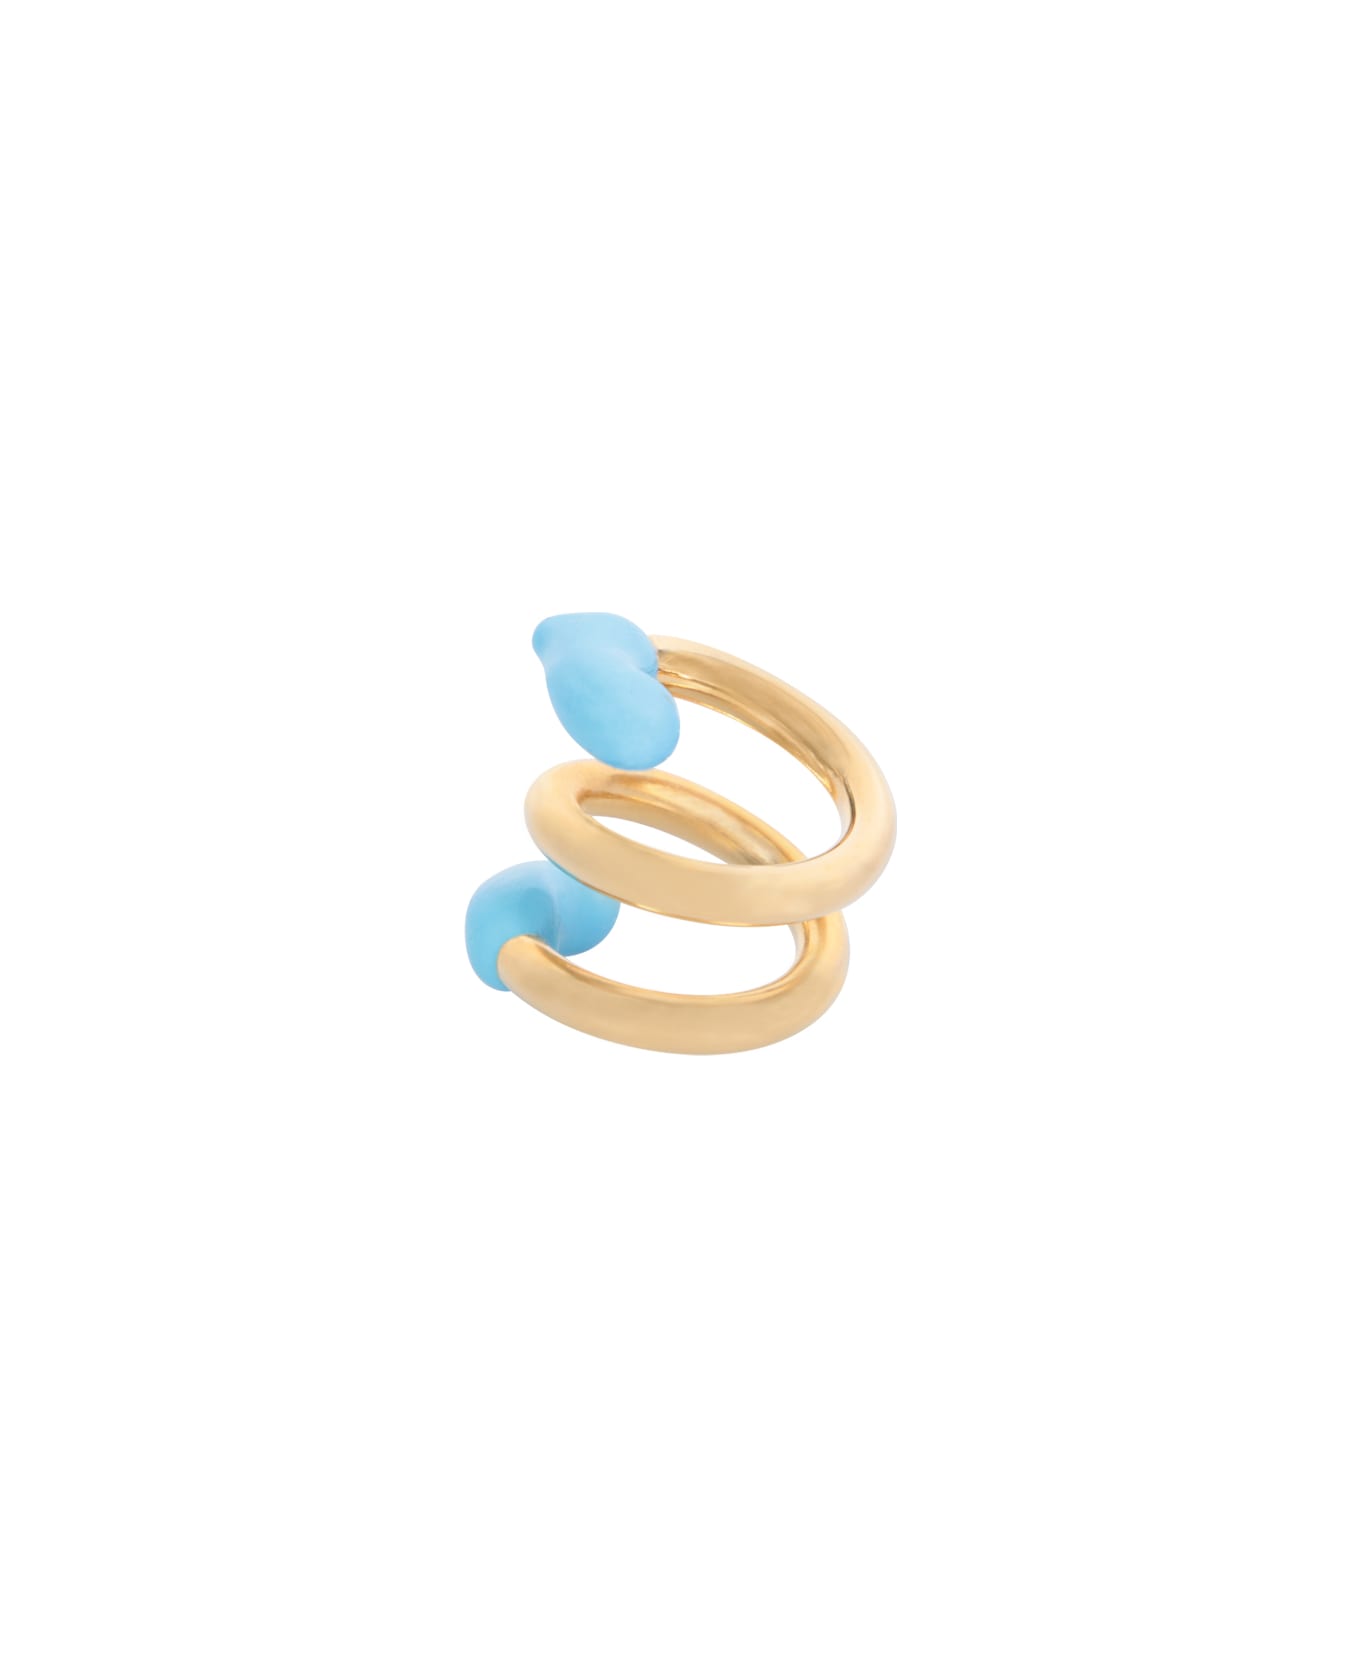 Sunnei Fusillo Rubberized Gold/ Light Blue Ring - Metallic